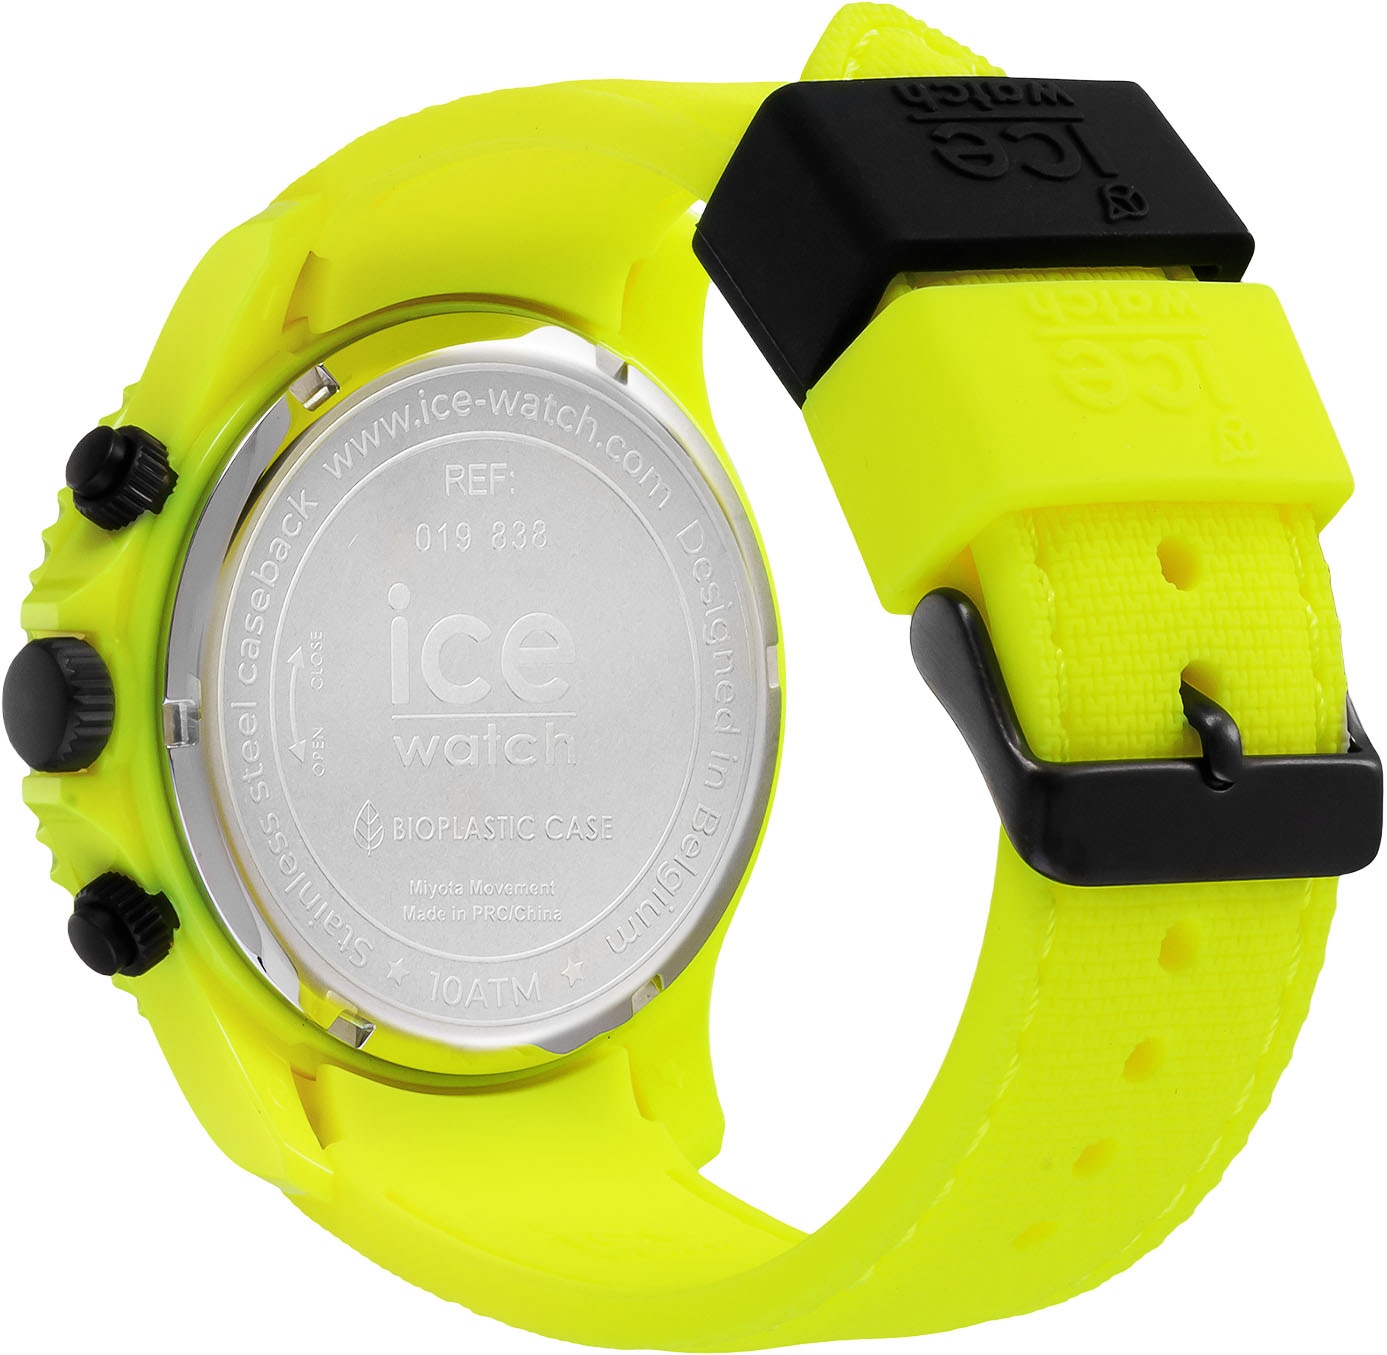 ice-watch Chronograph »ICE Large CH, | - yellow online - - Neon BAUR bestellen chrono 019838«